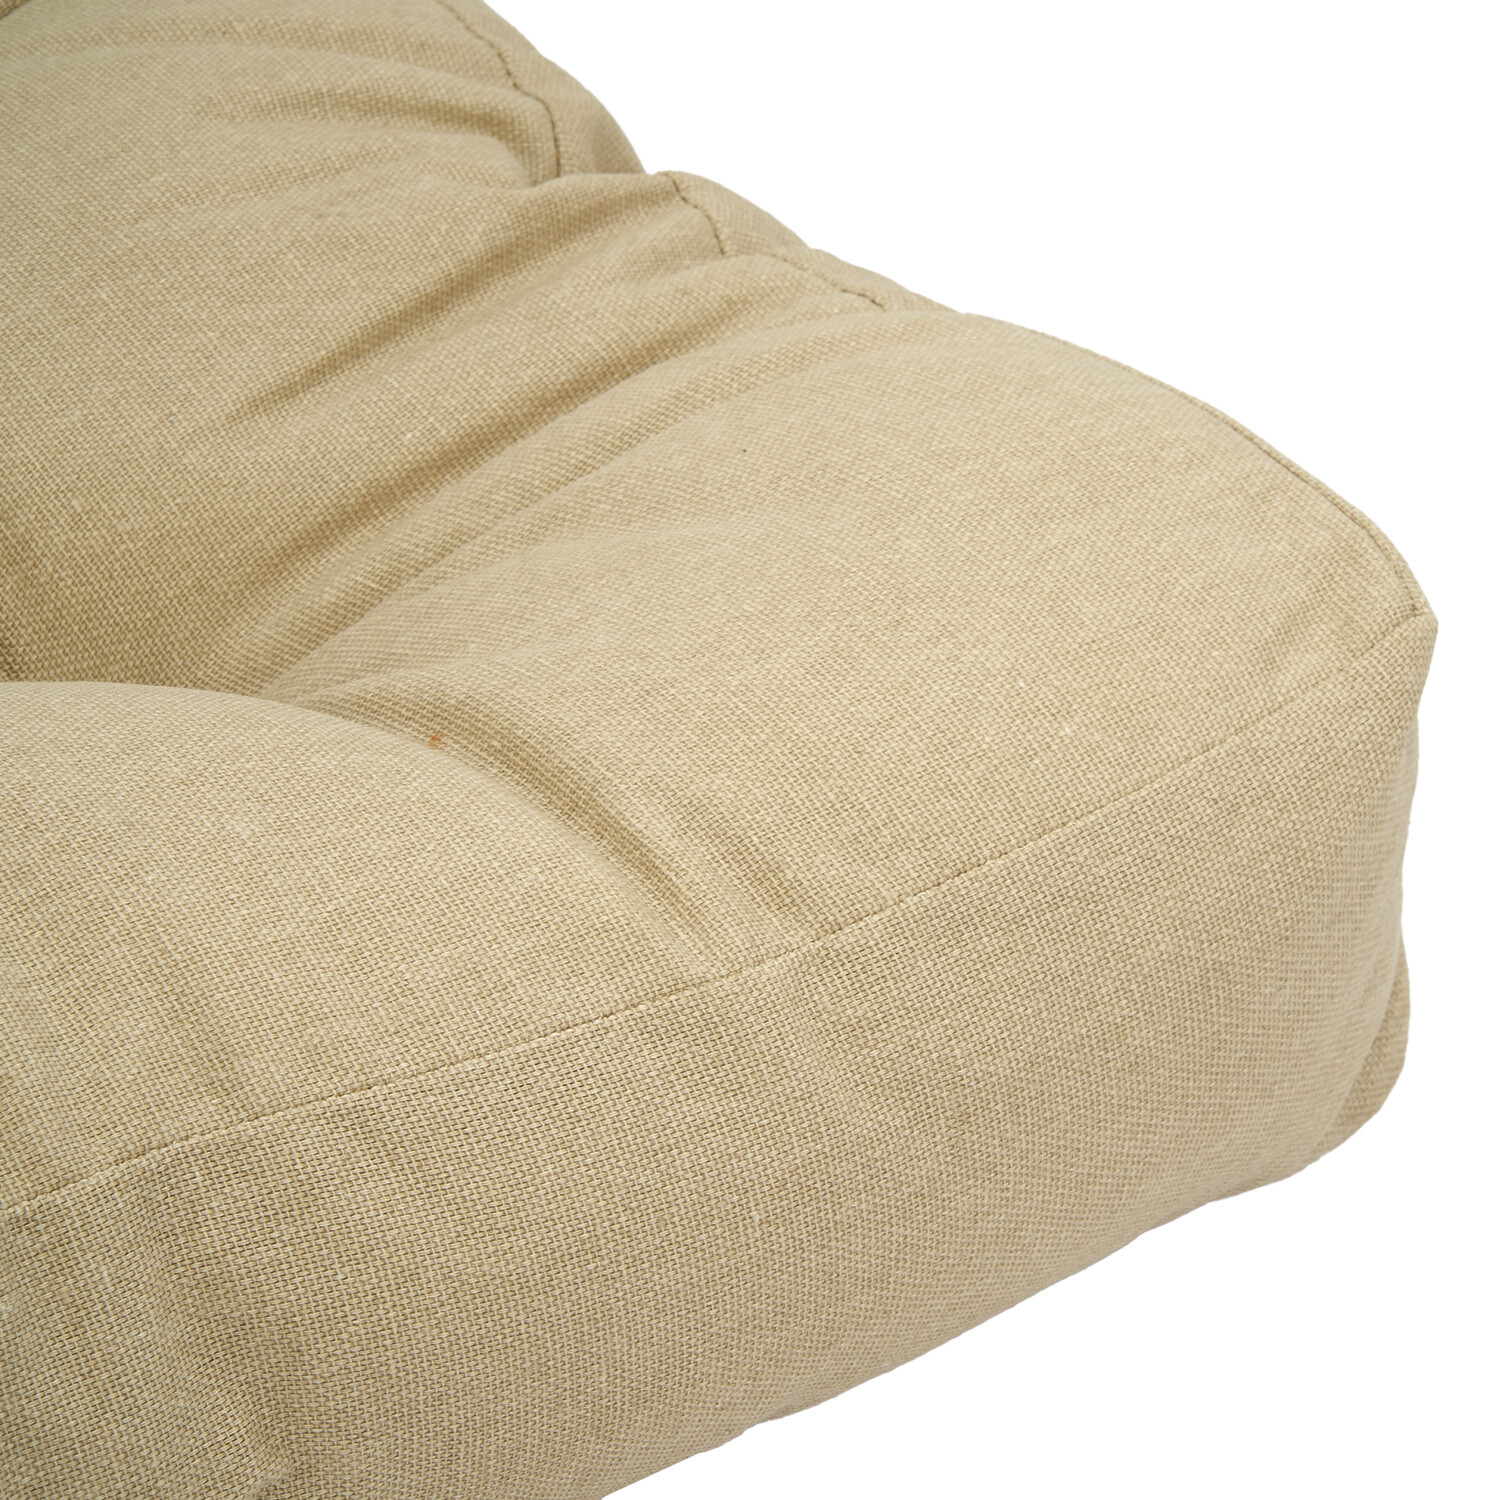 Premium Booster Cushion - Beige Image 2